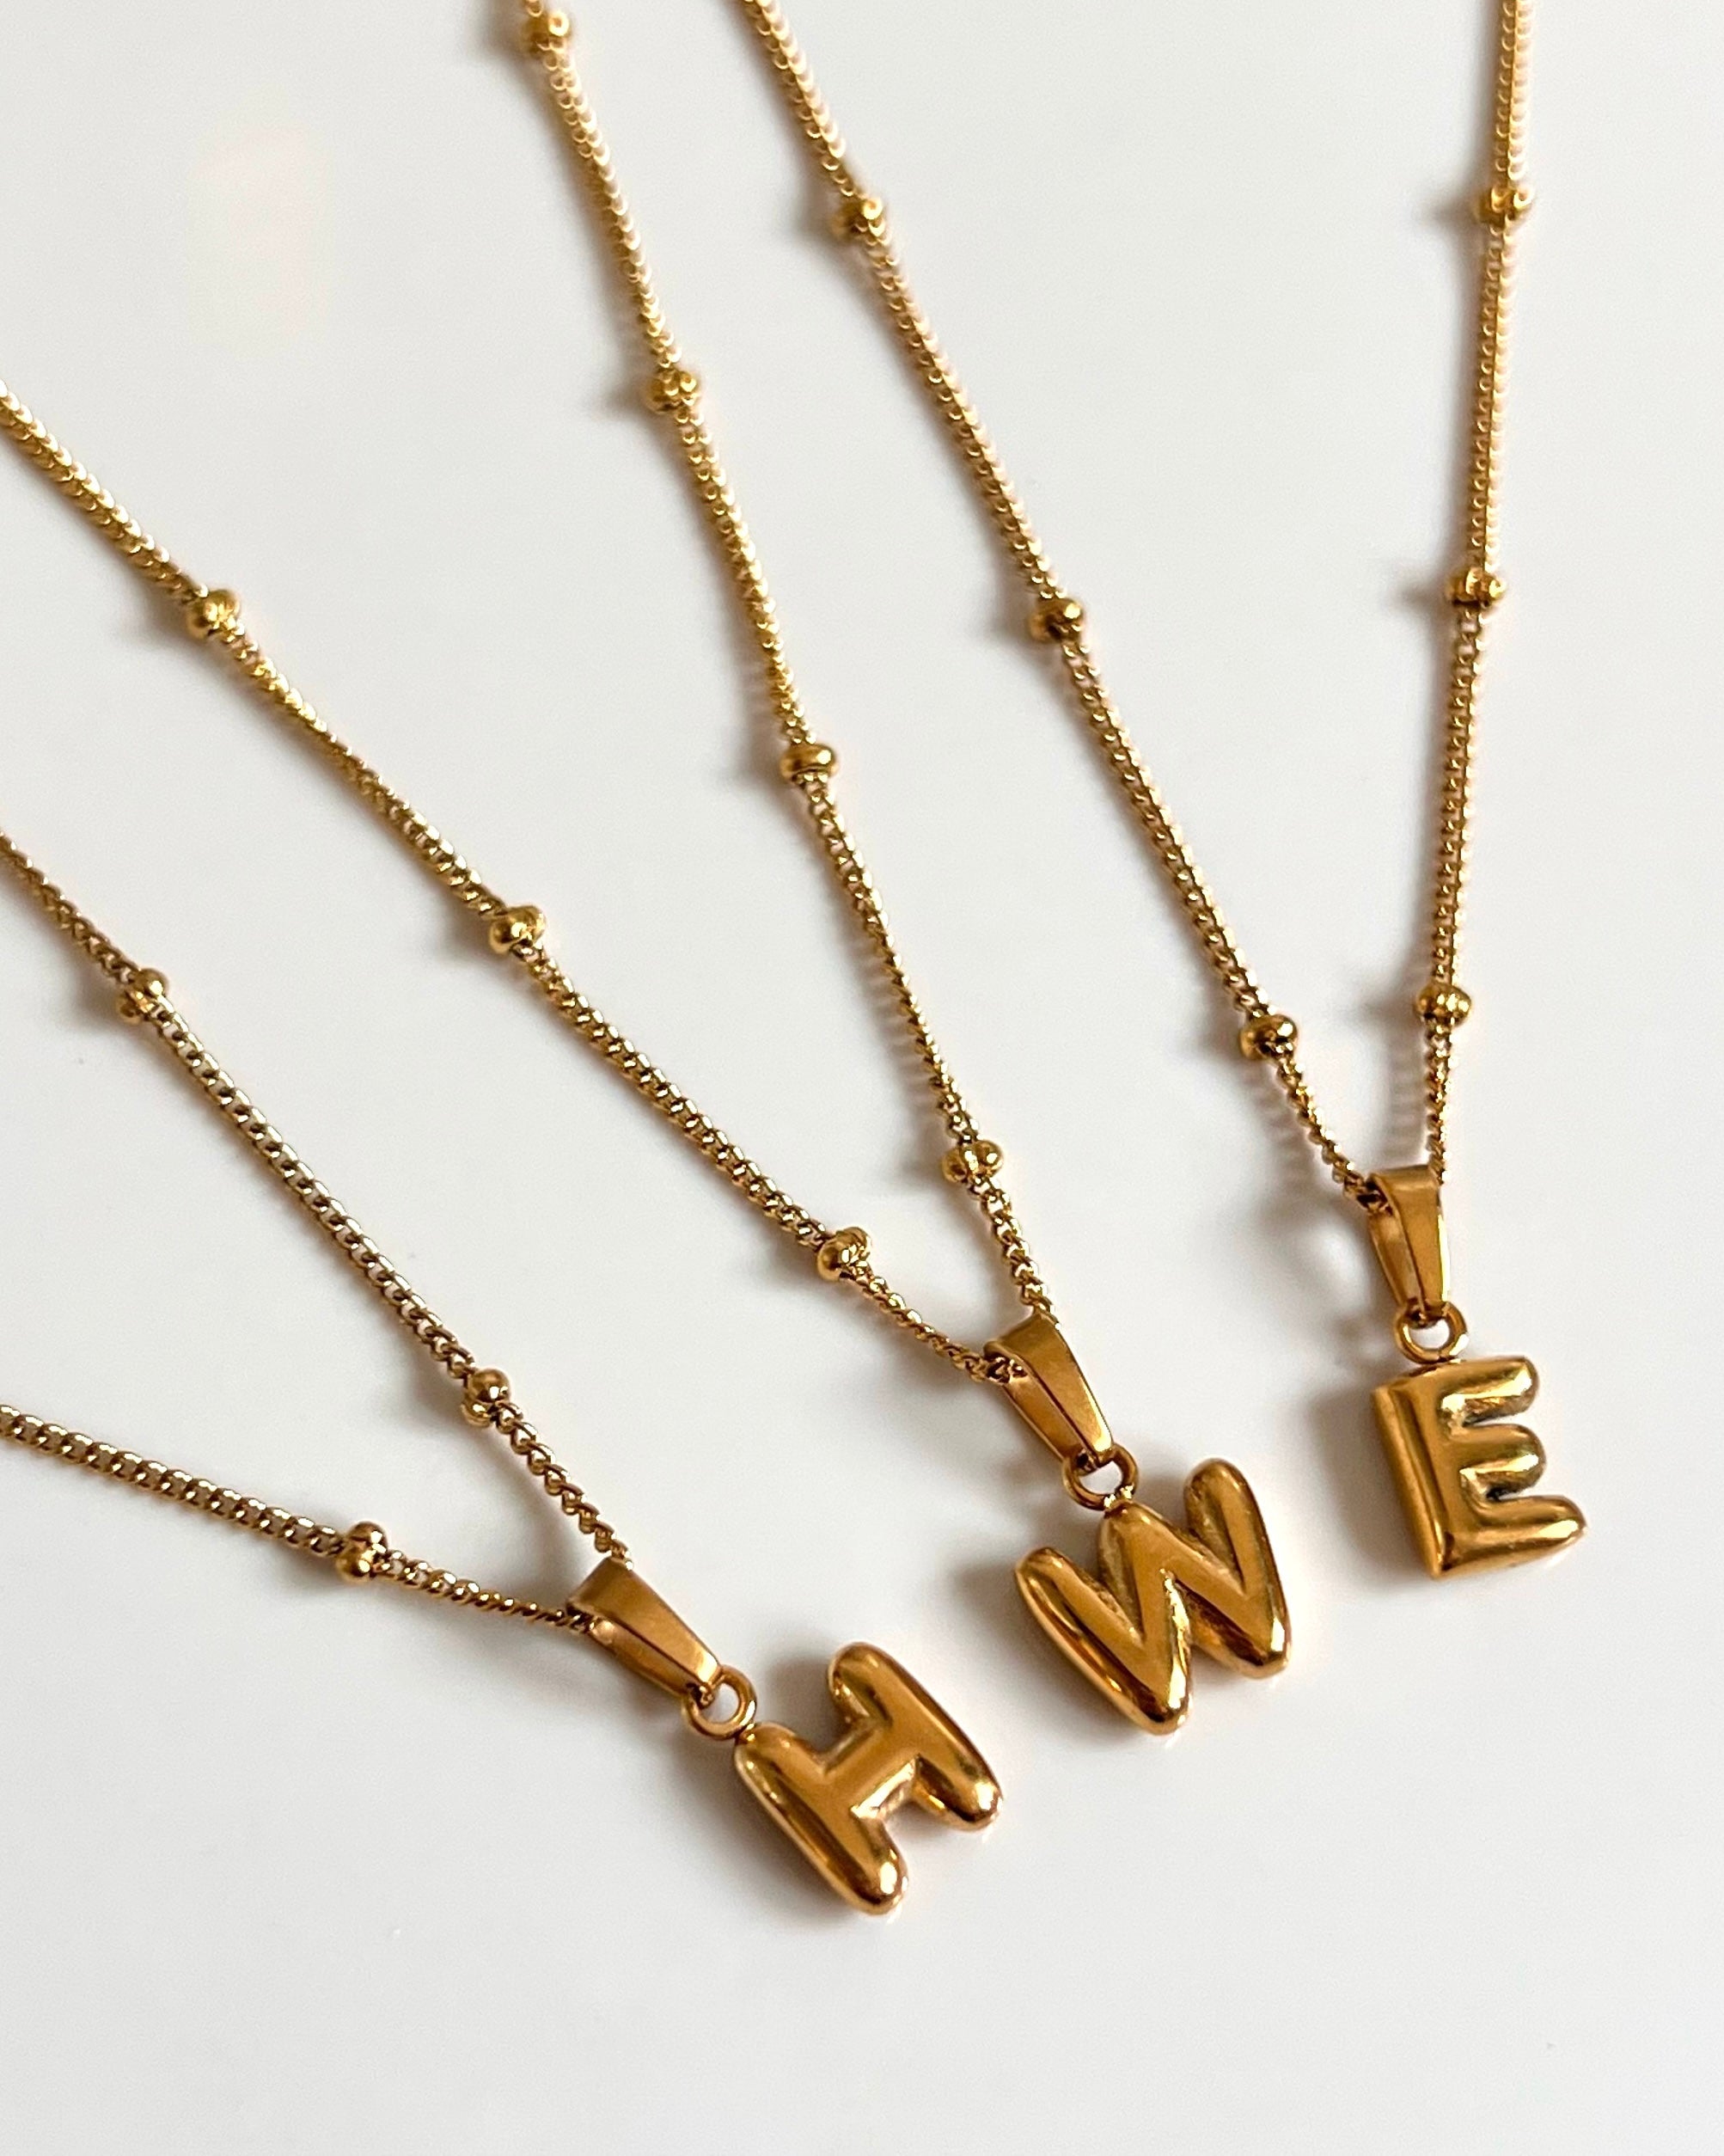 Gold Bubble Letters A Neklace for Men Women Cubic Zirconia CZ Diamond  Pendant with Wheat Chain Hip Hop Jewelry | Amazon.com